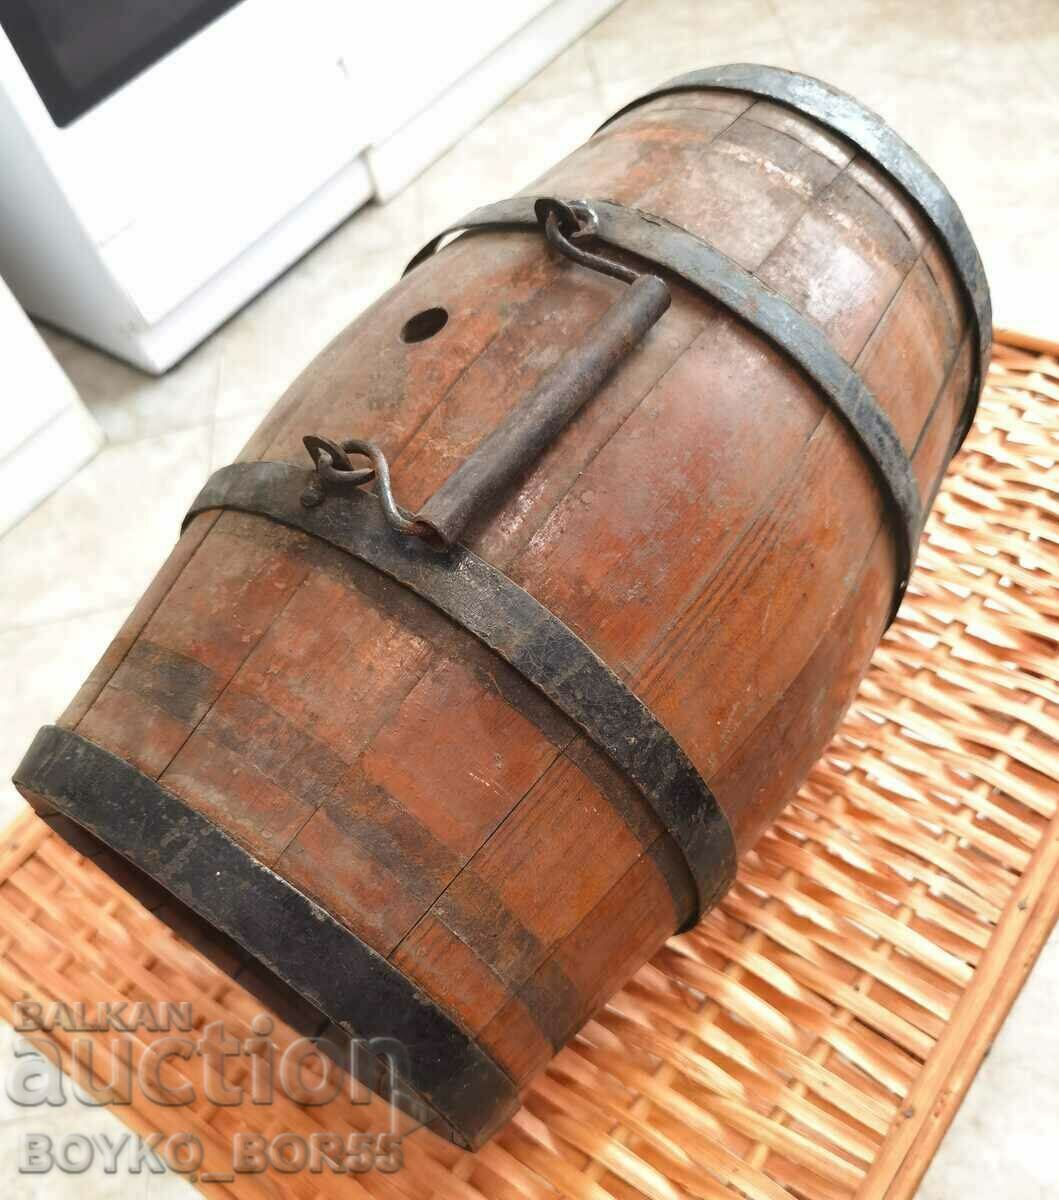 Old Barrel Barrel Keg with Carrying Handle